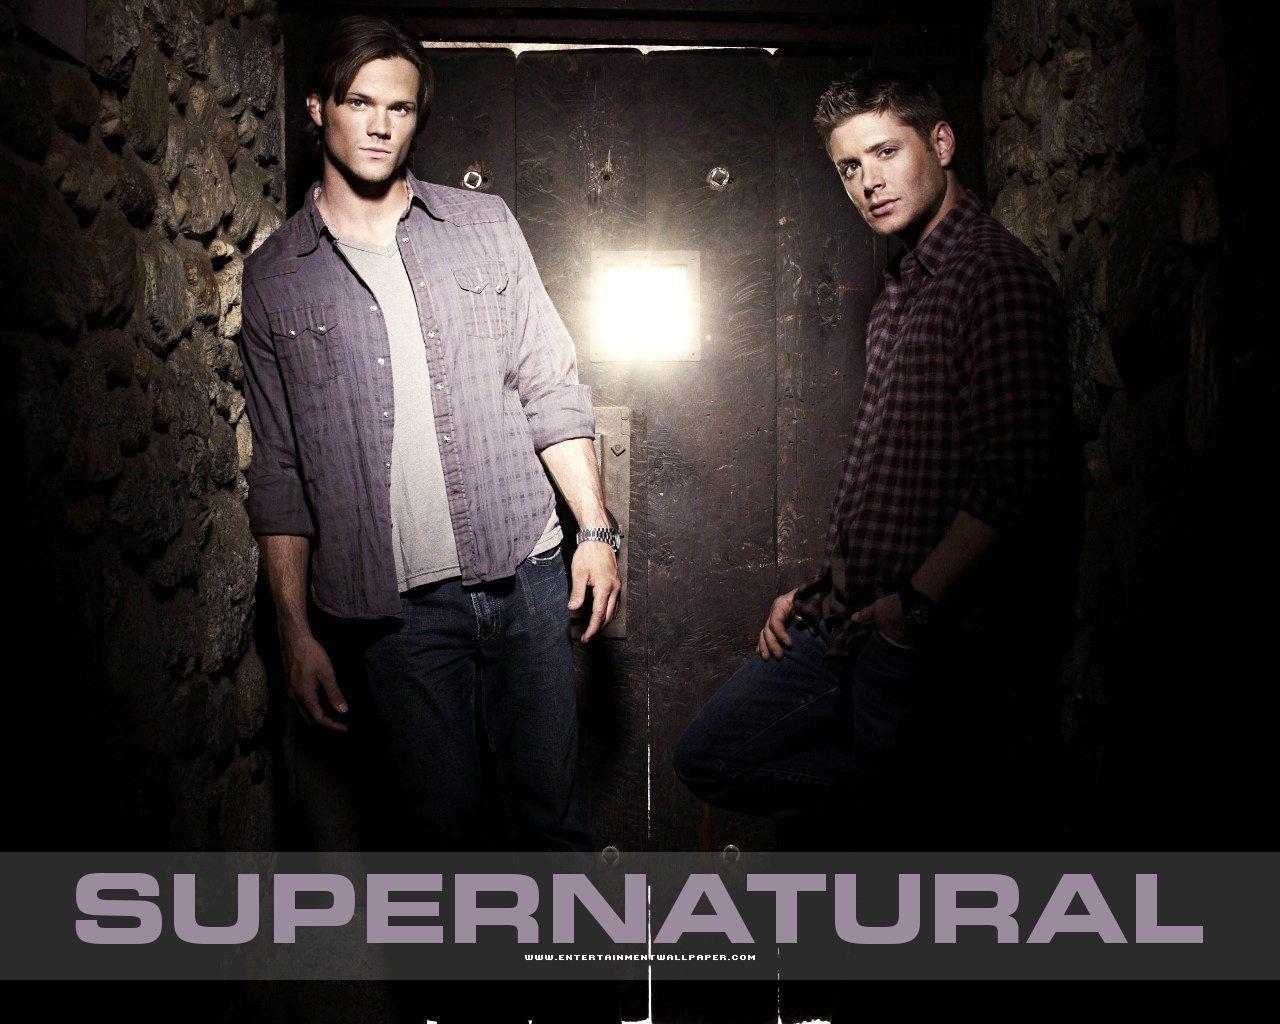 Supernatural (U.S. TV Series) « ShpinTV